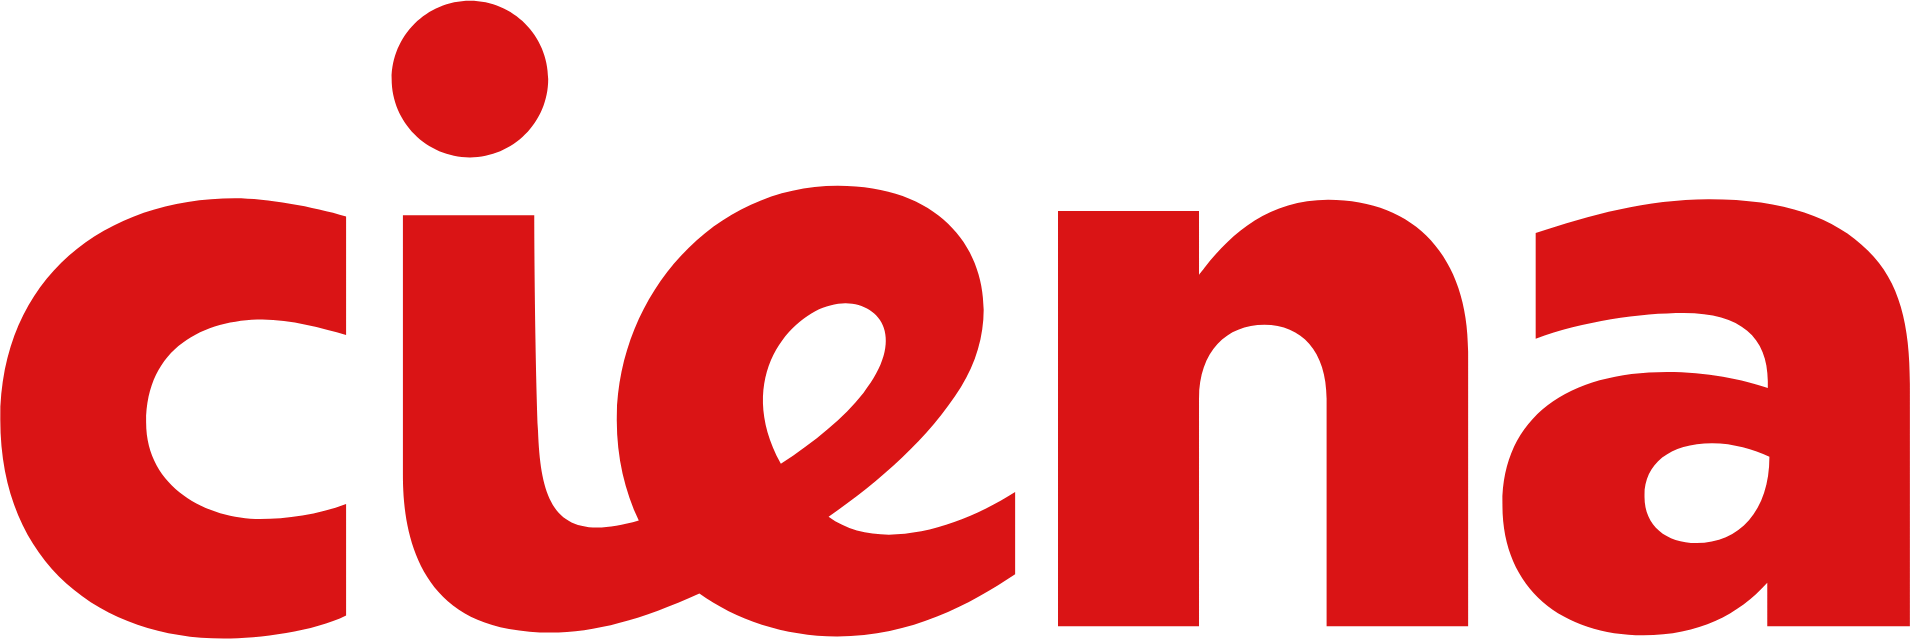 Ciena logo (PNG transparent)